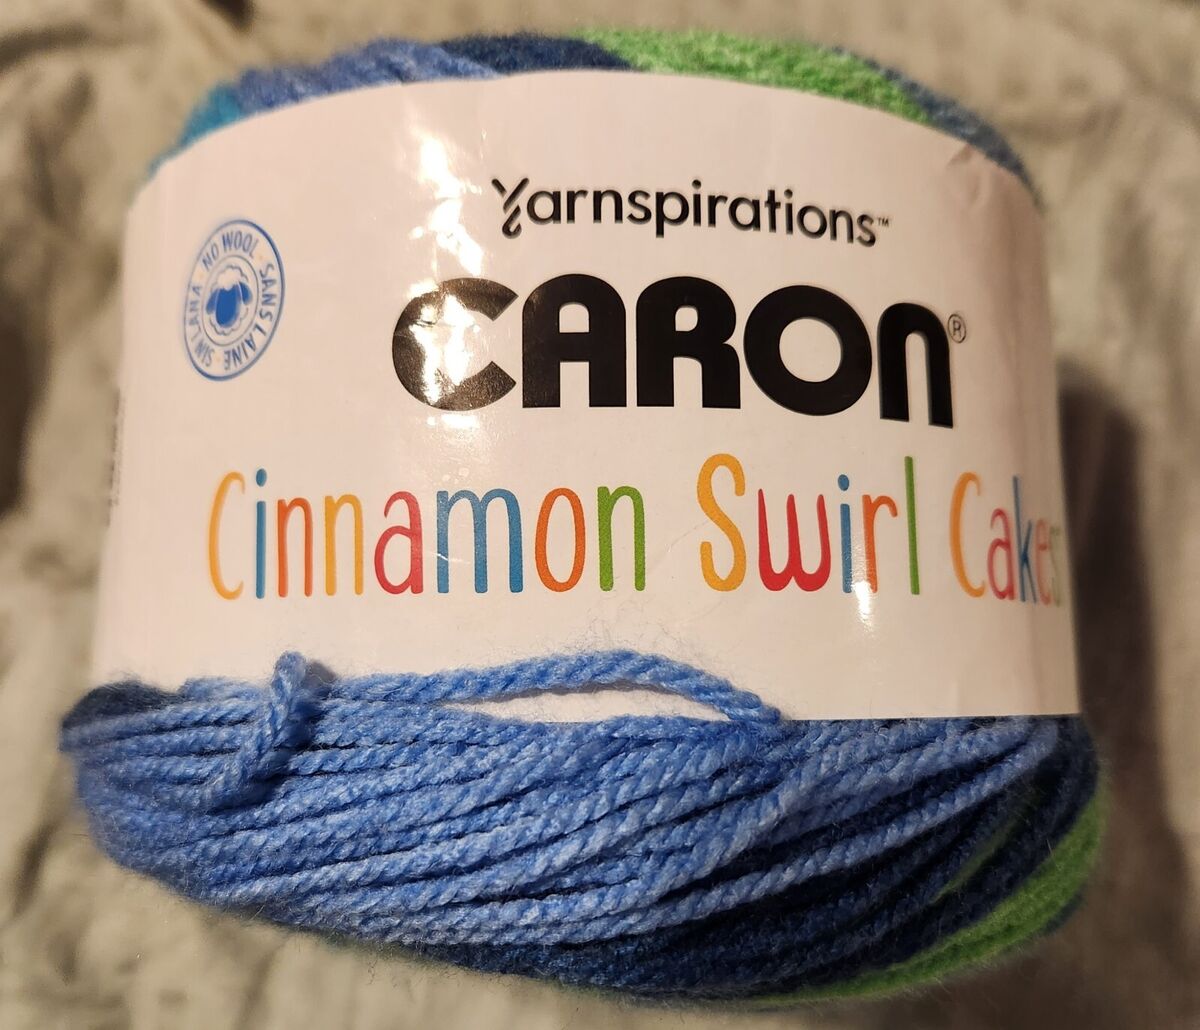 One 8 oz Skein Caron Cinnamon Swirl Cakes Yarn ~ 407 yds. Various